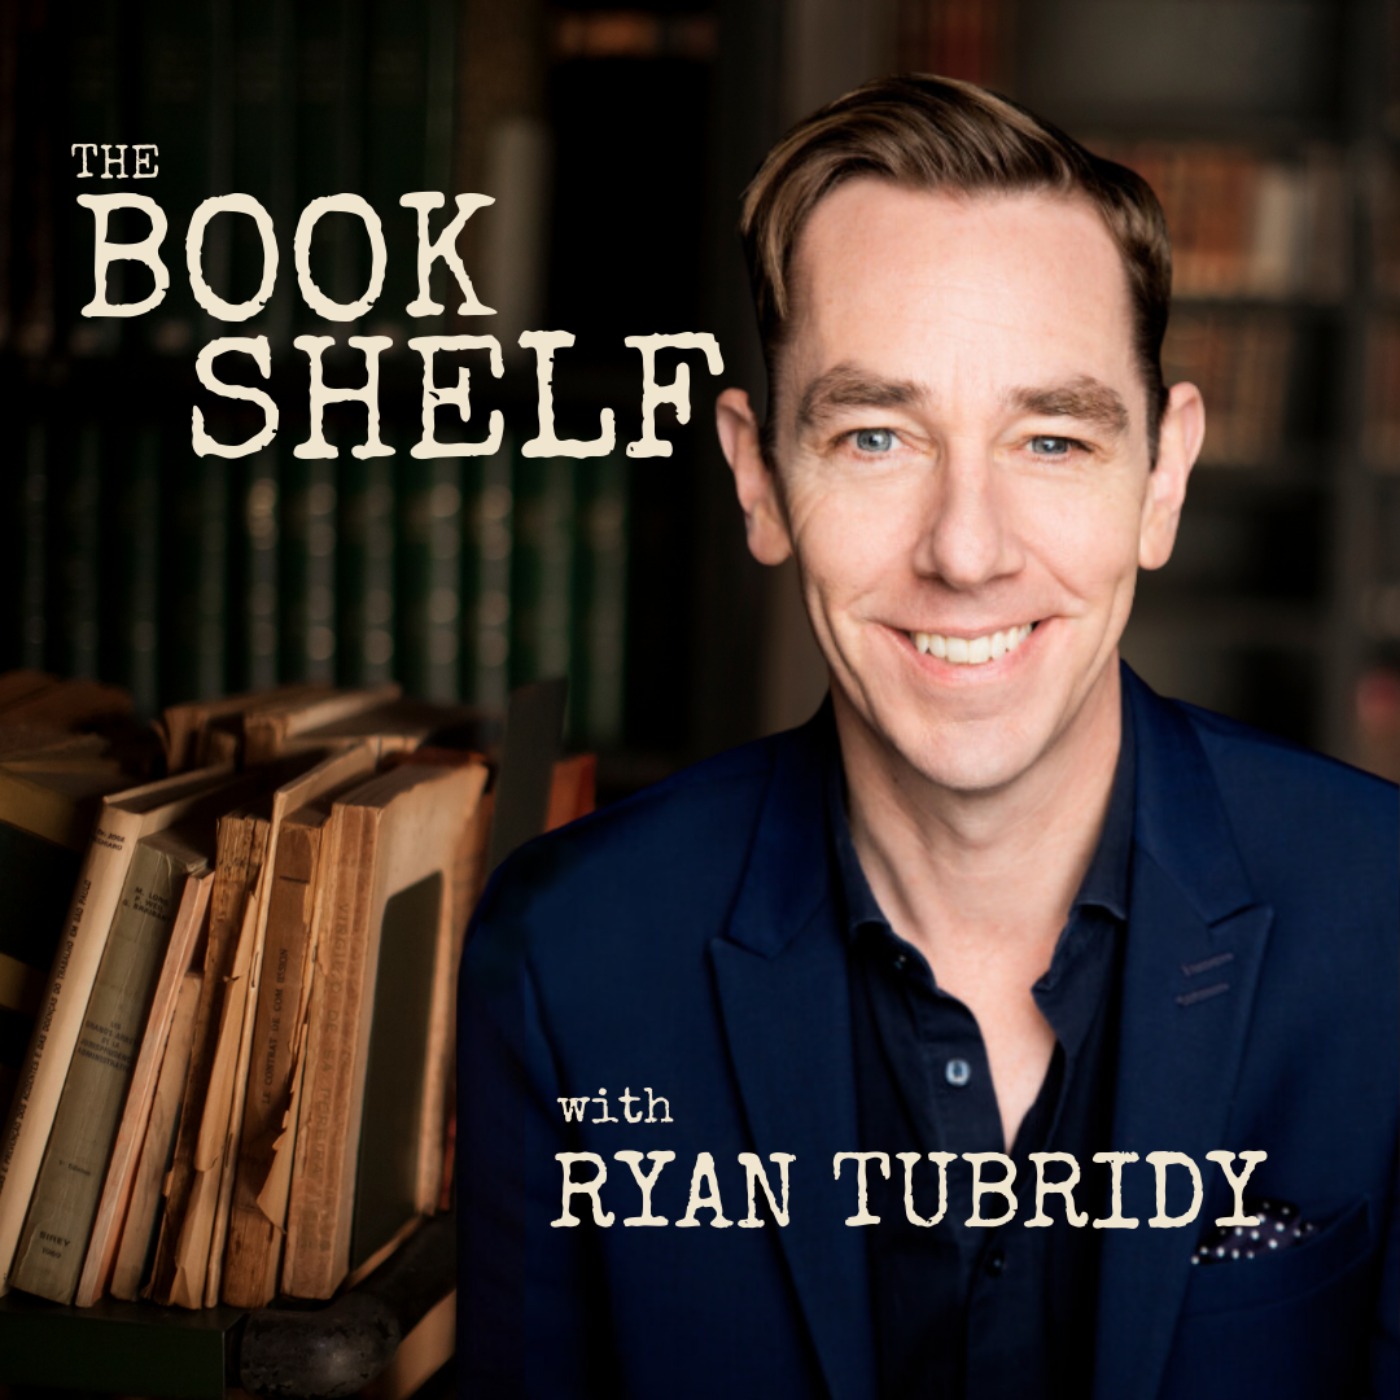 The Bookshelf with Ryan Tubridy Image